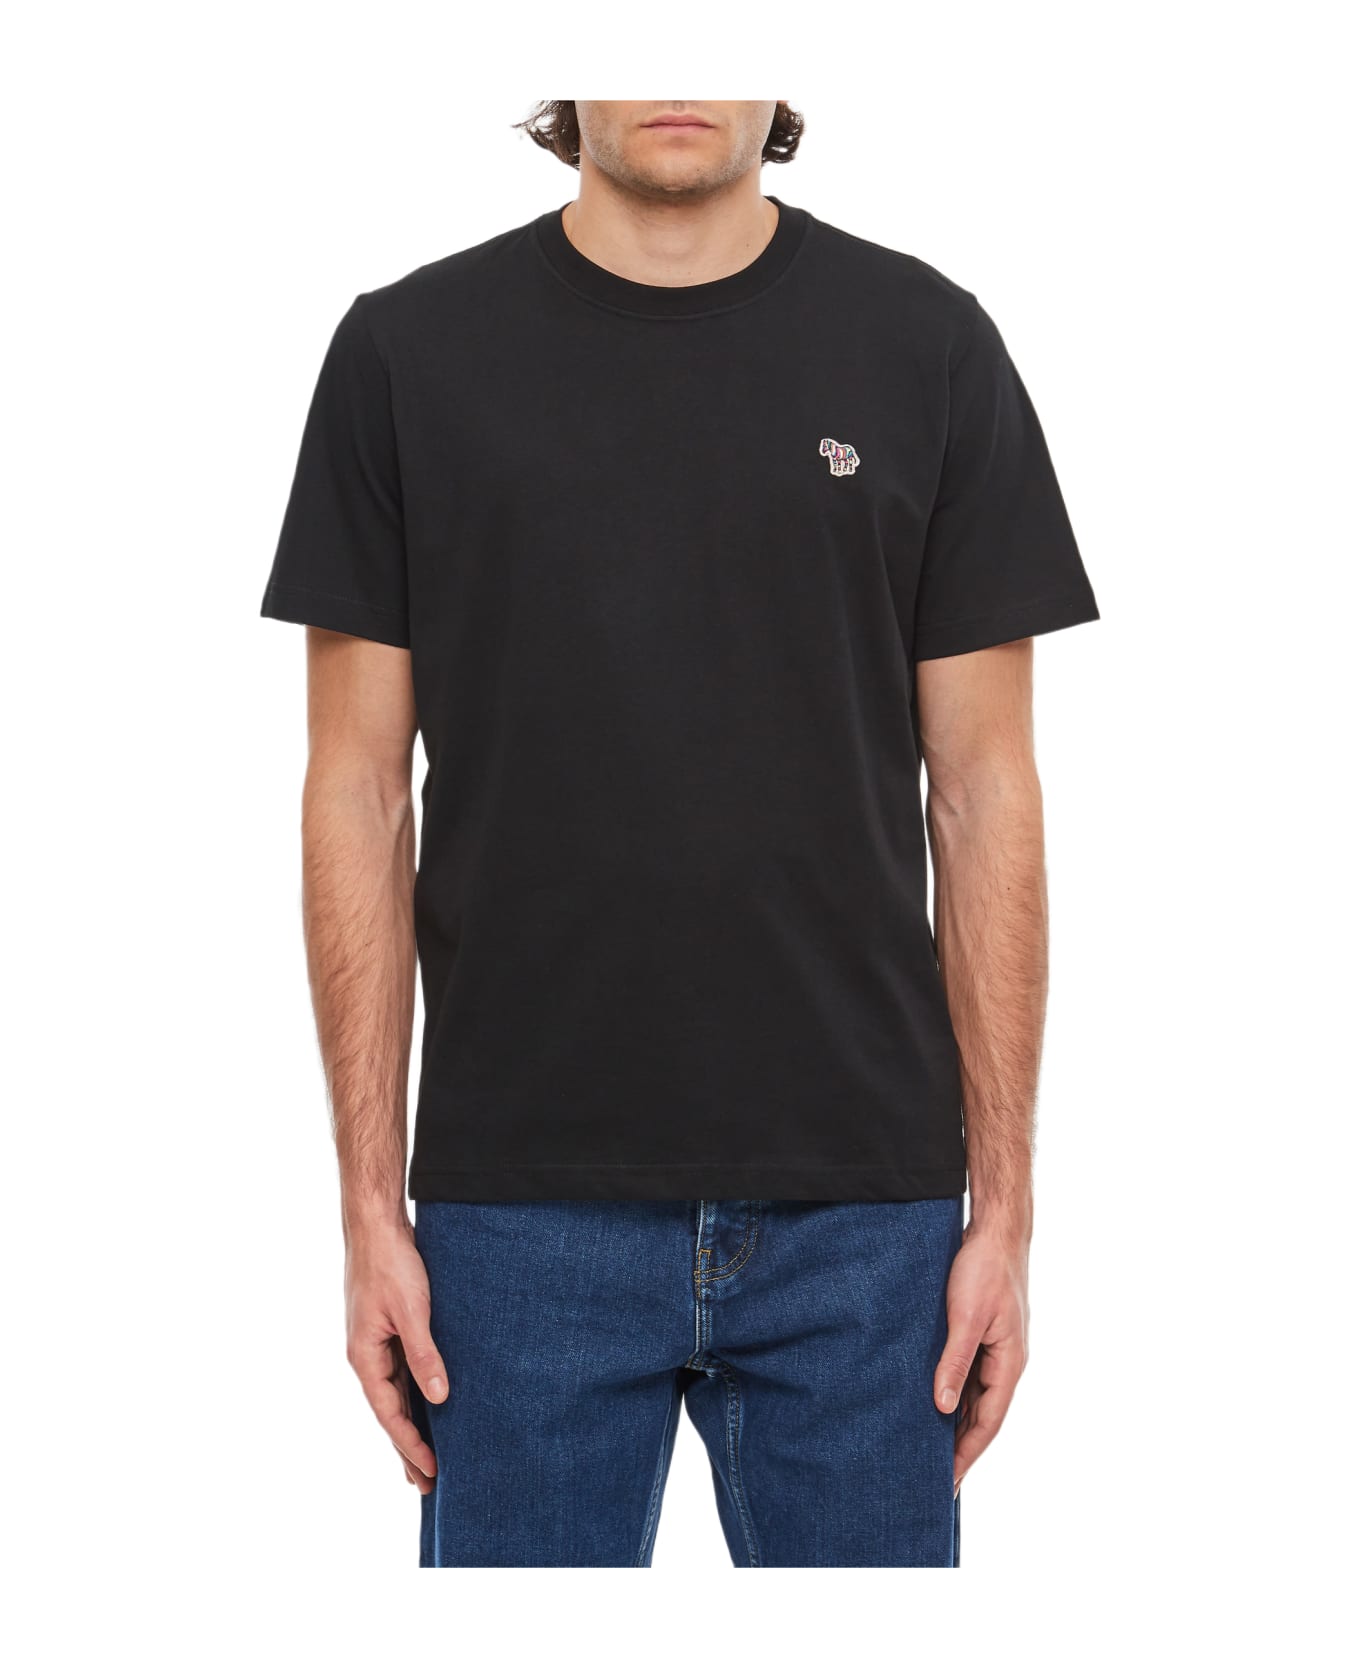 Paul Smith Zebra T-shirt - Black シャツ